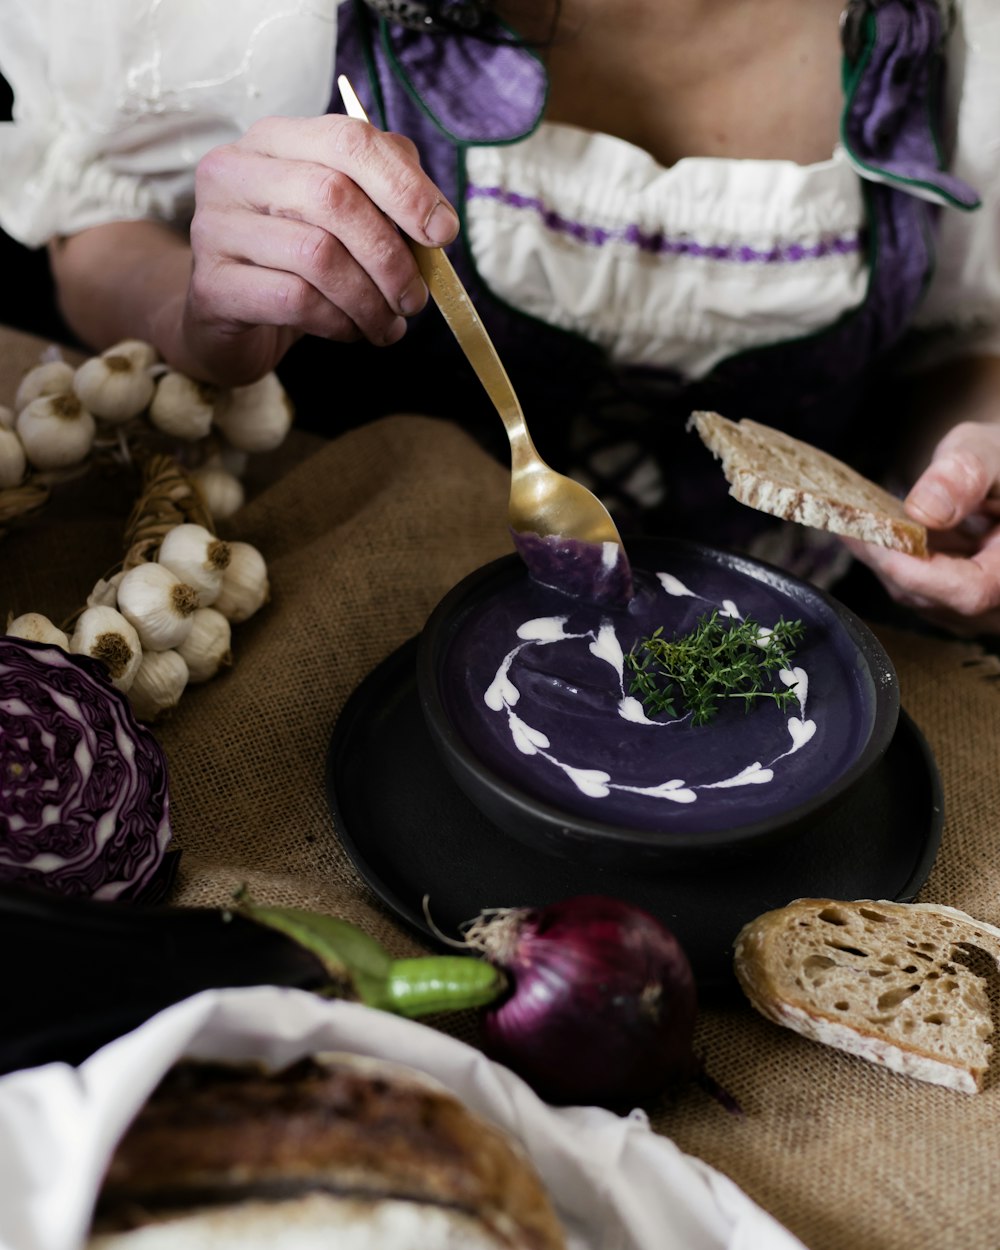 a woman in a purple dress is preparing food